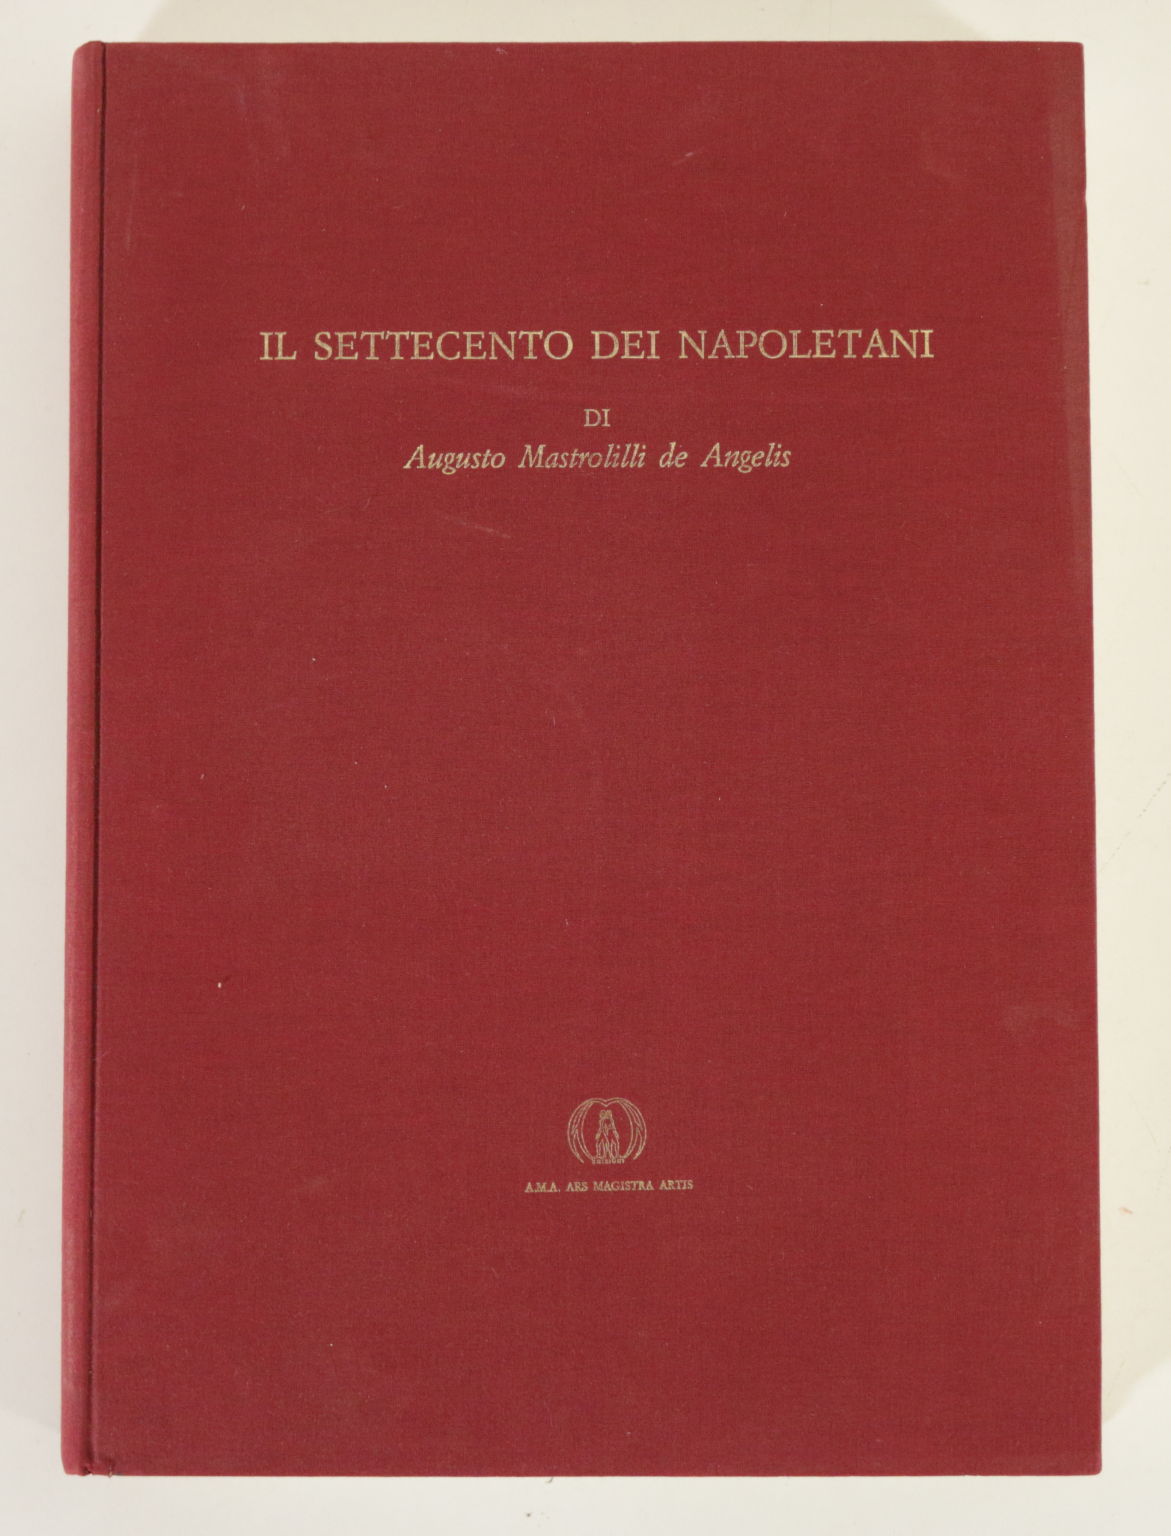 Le XVIIIe siècle des Napolitains par Augusto Mastrolill, Angelo Calabrese